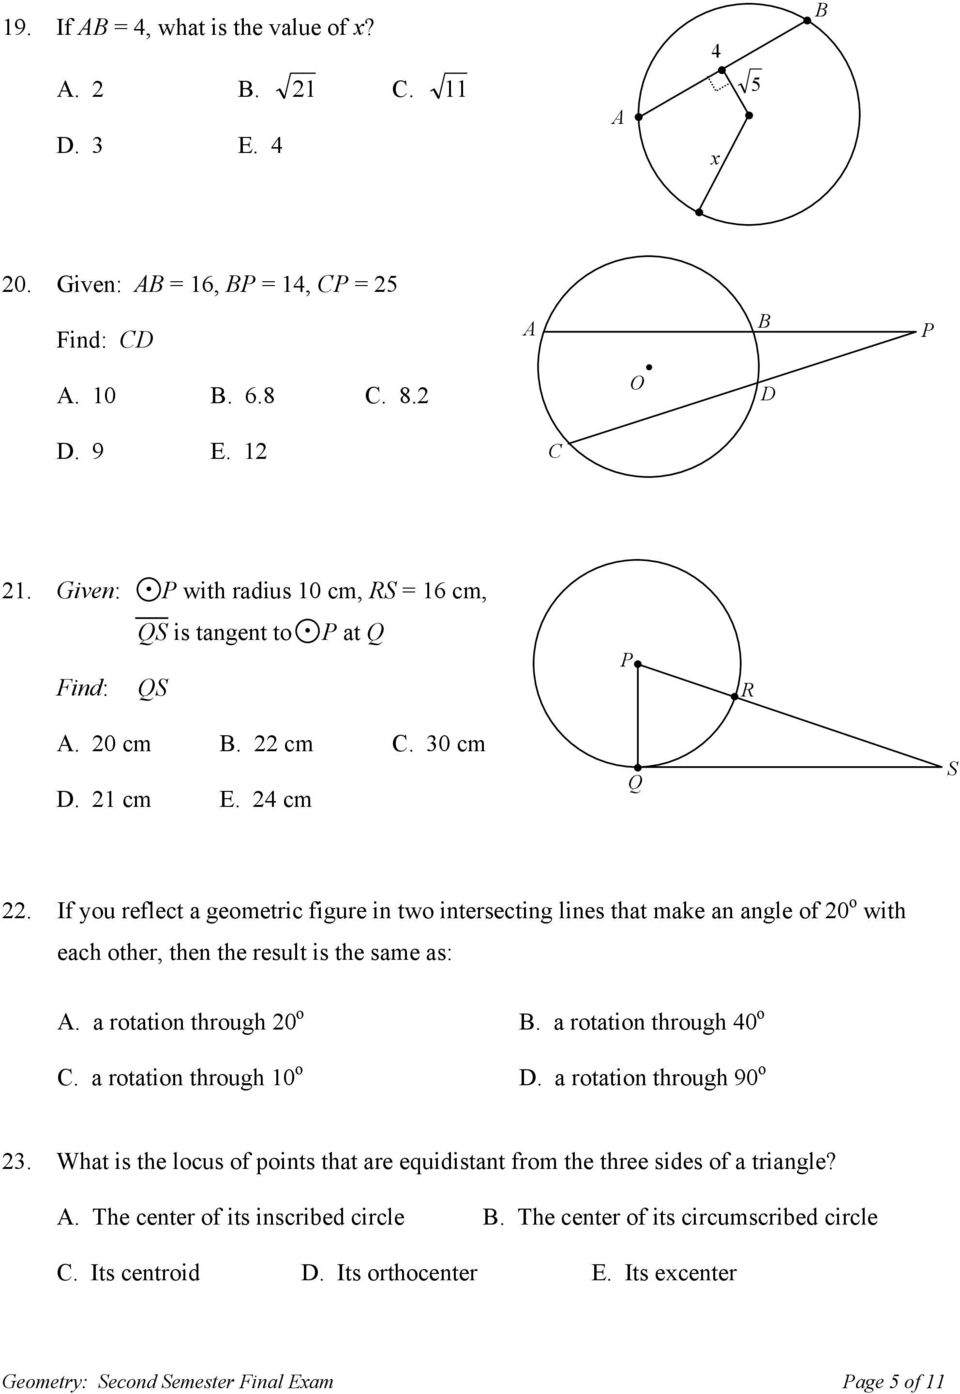 Geometry Second Semester Final Exam Answer Key Pdf / Test ...